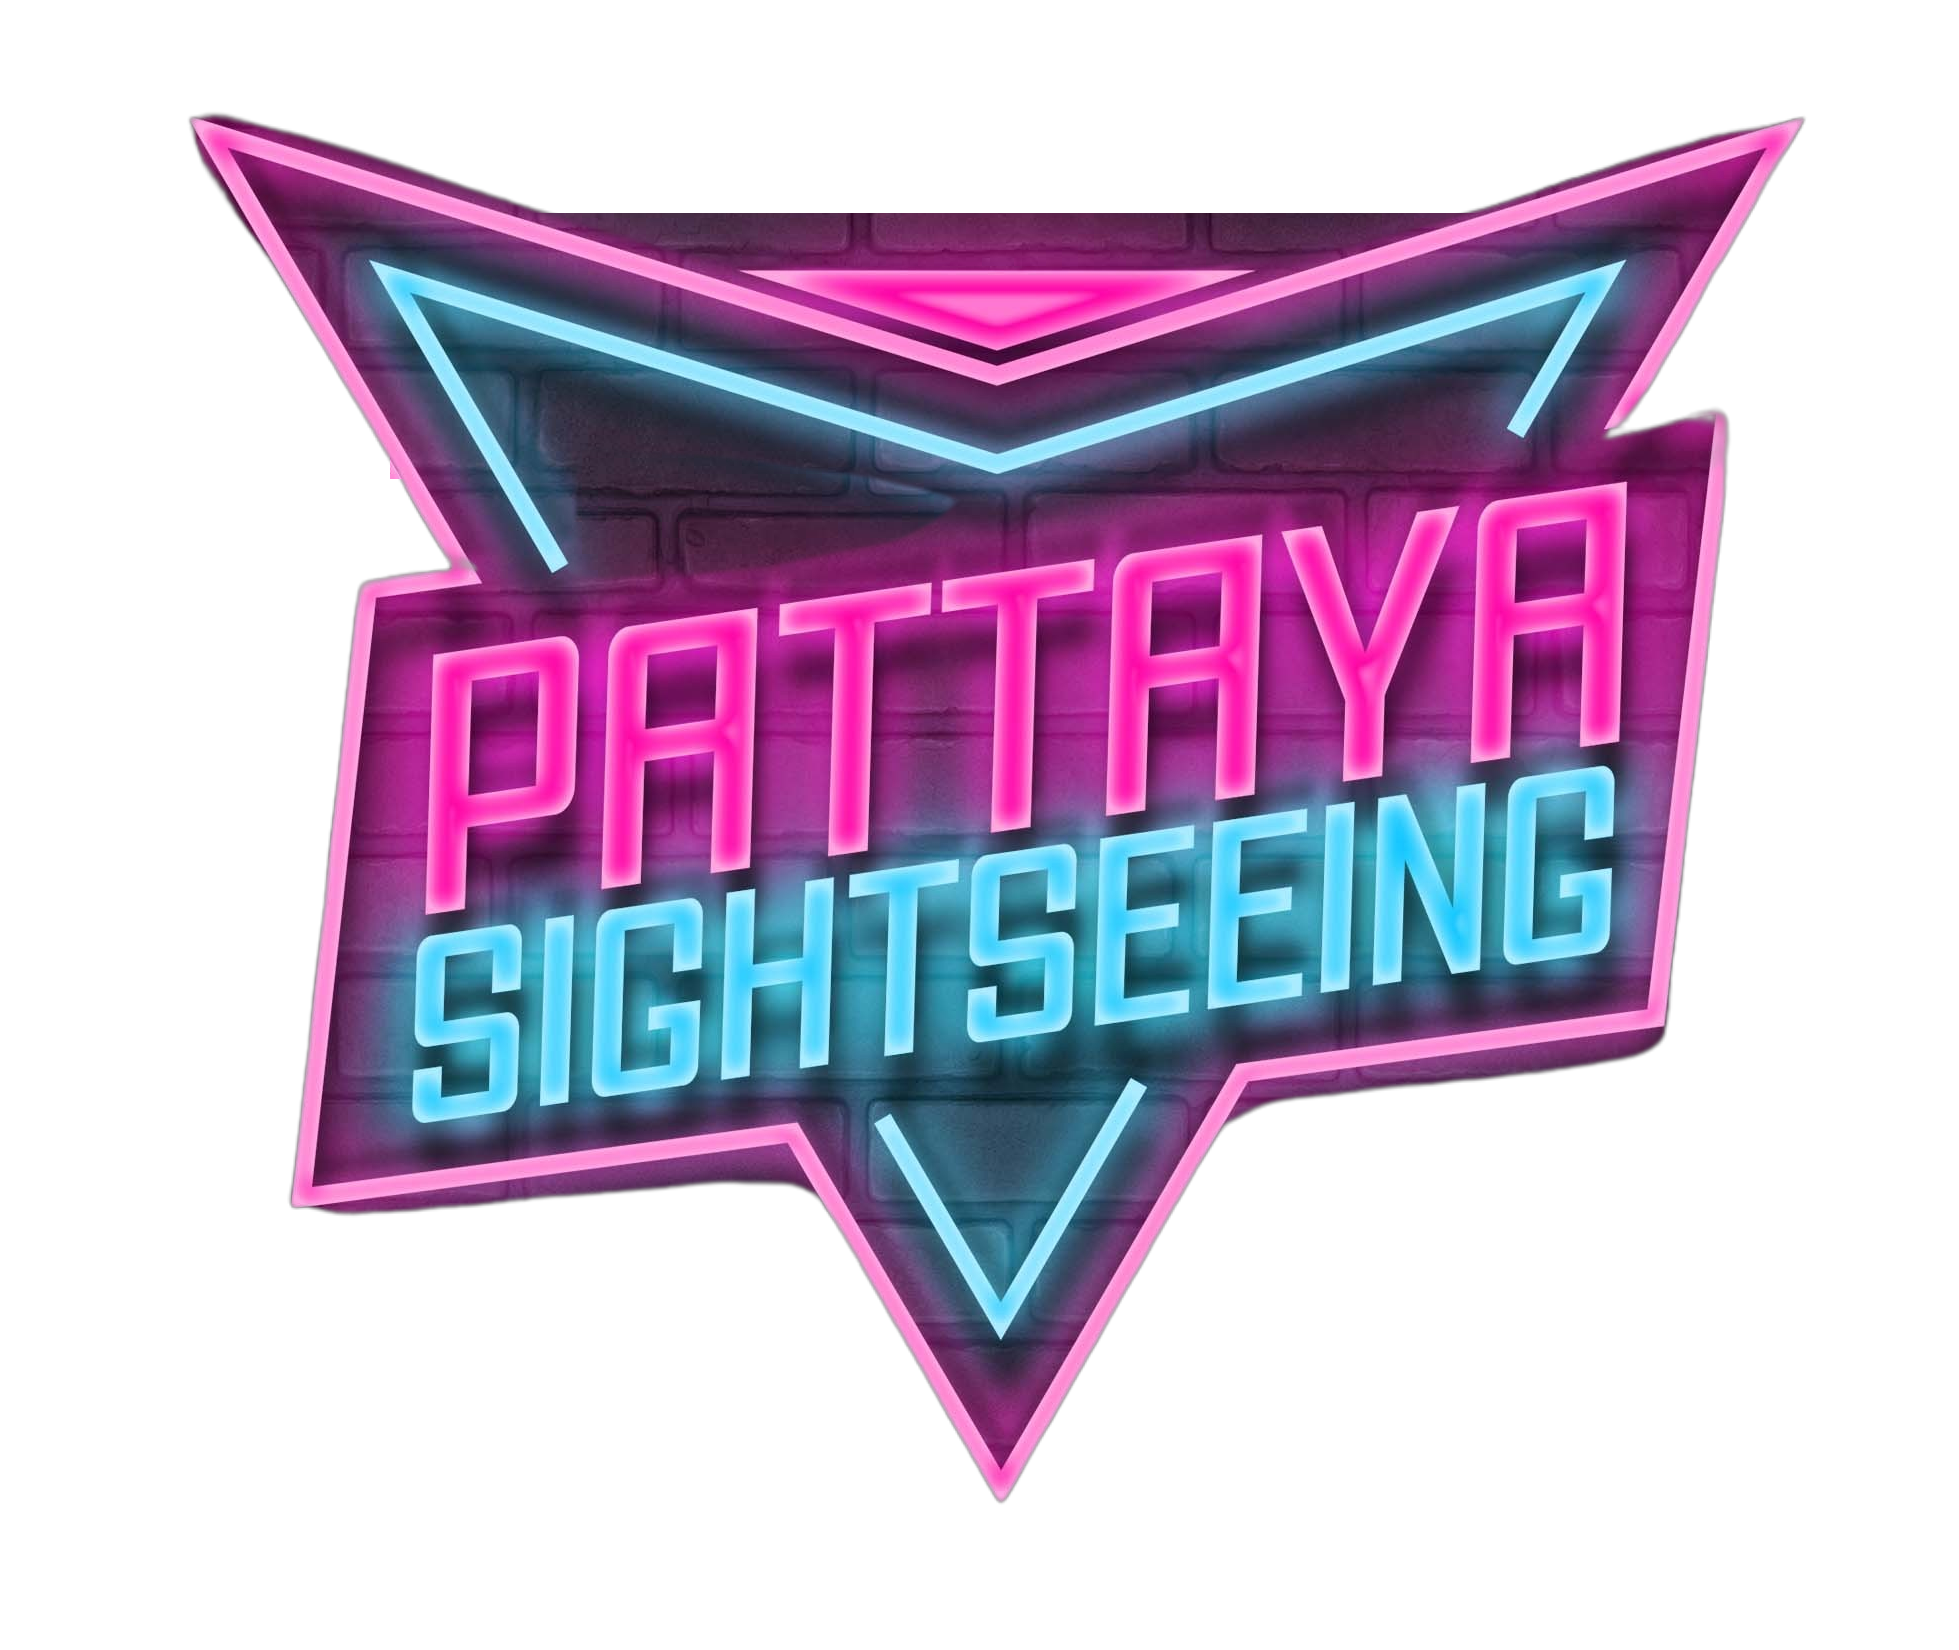 Pattaya Sightseeing